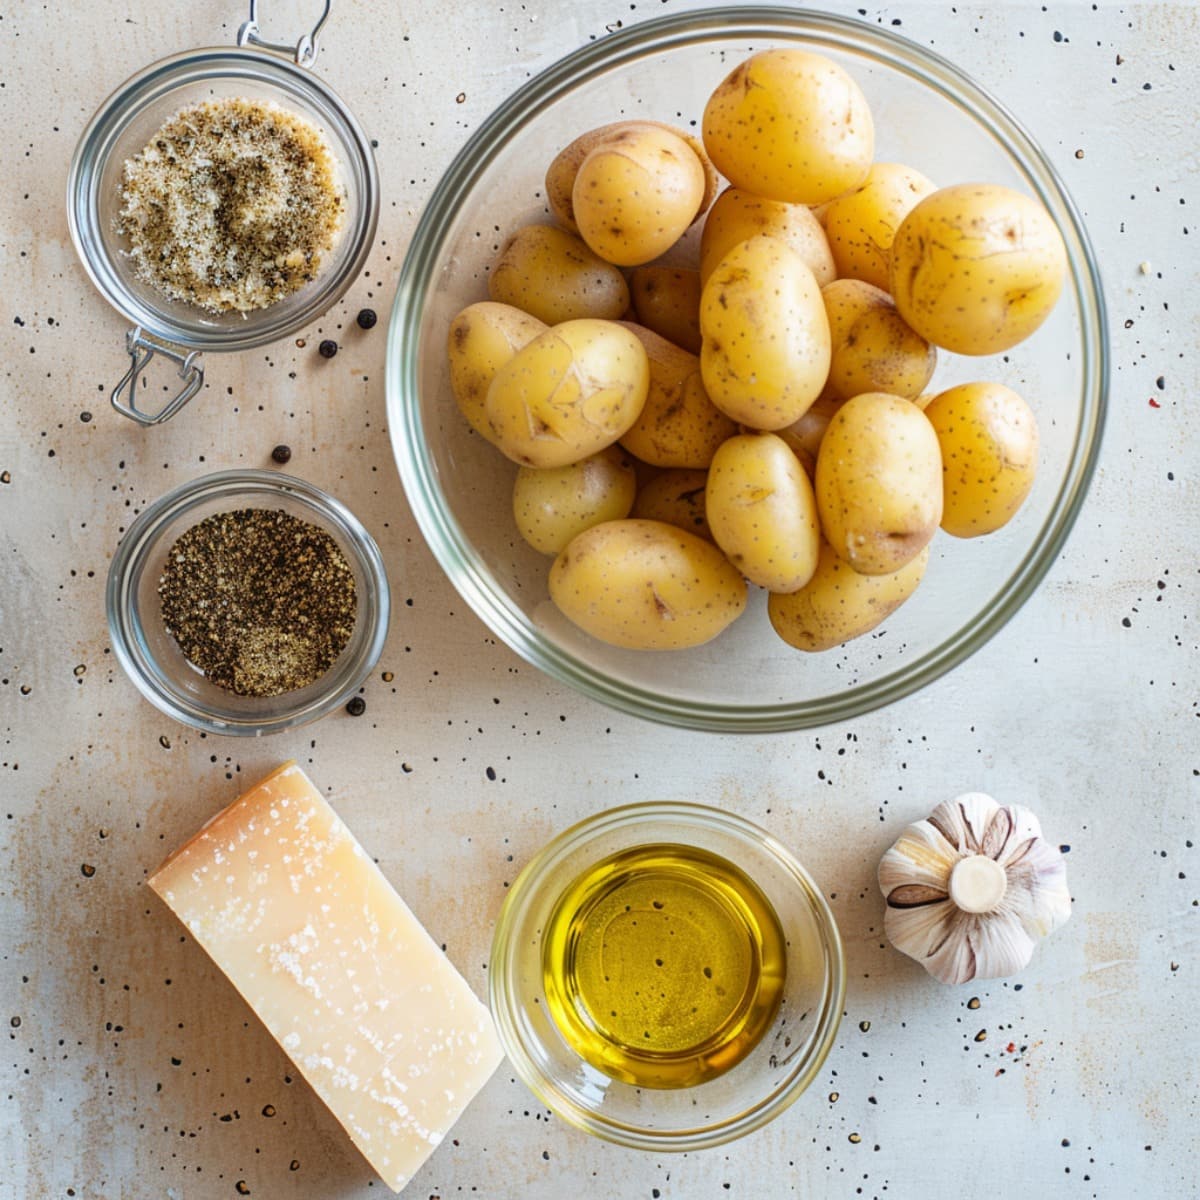 Roasted Parmesan Potatoes Ingredients: potatoes, salt, pepper, garlic, parmesan, and oil